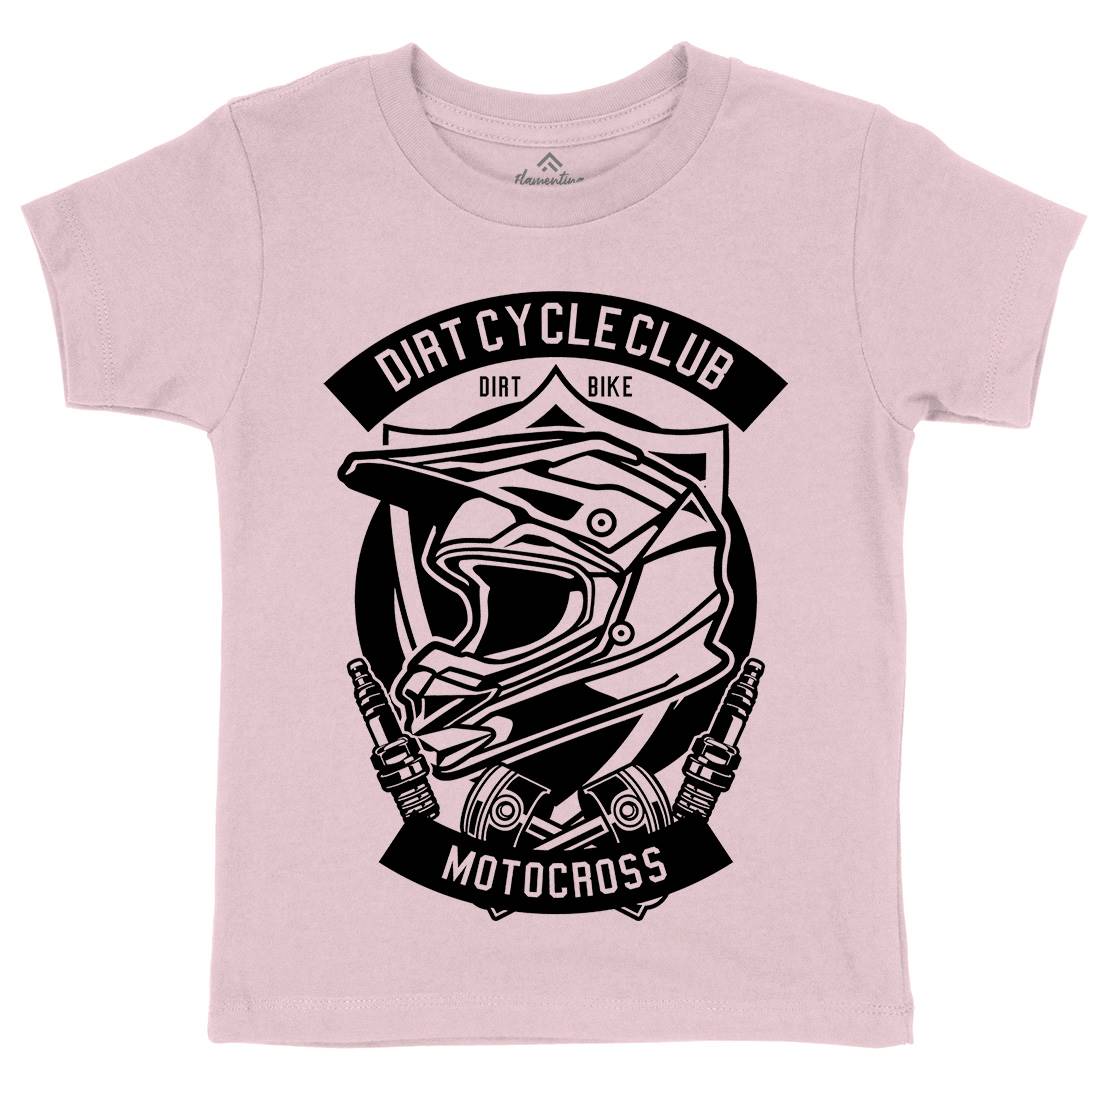 Dirty Cycle Club Kids Crew Neck T-Shirt Motorcycles B532